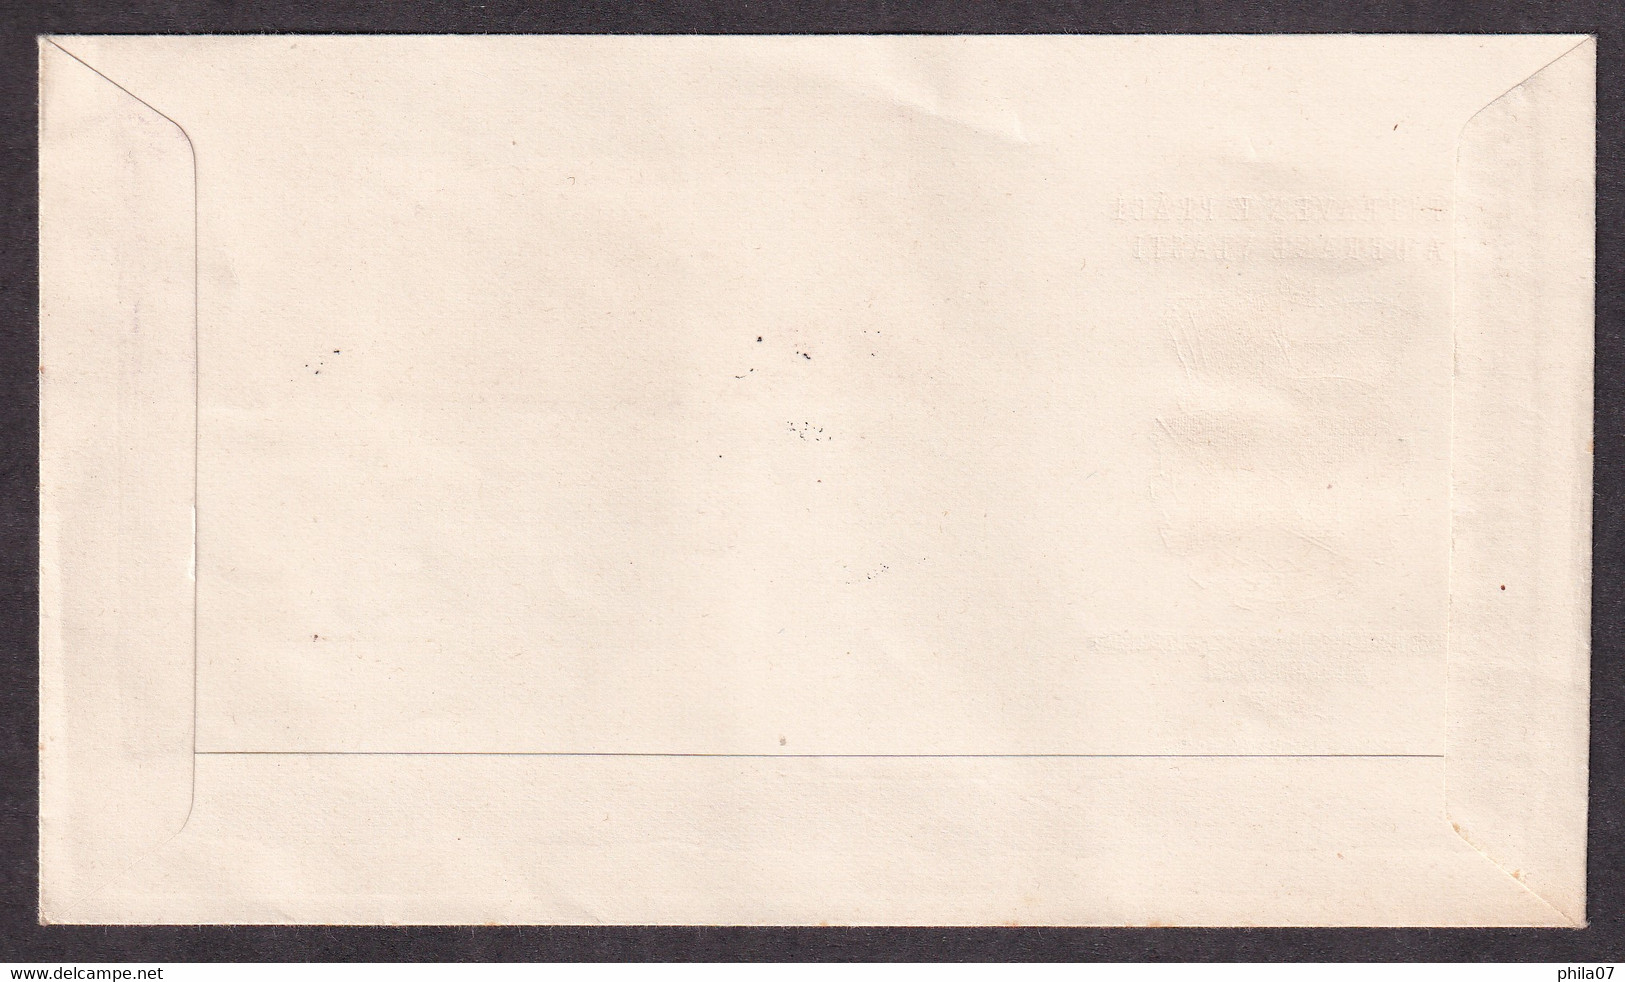 CZECHOSLOVAKIA - Commemorative Envelope: +Pripraven K Praci A Obrane Vlasti', Complete Serie On Envelope And Commemorati - Covers & Documents